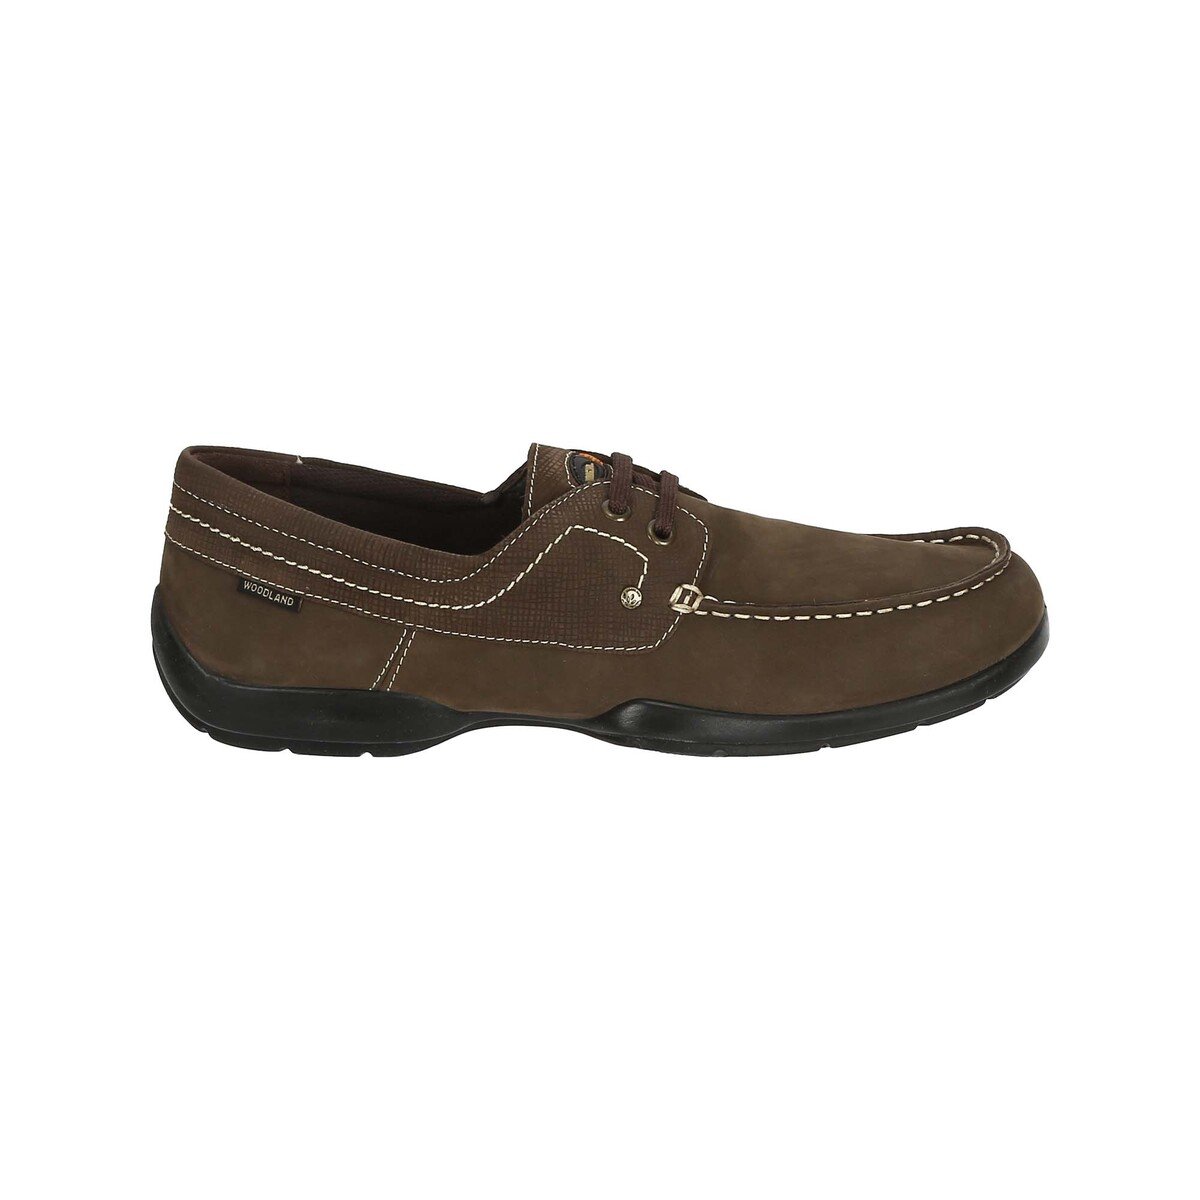 Woodland Men's Casual Shoes GC3391119D Dark Brown, 40